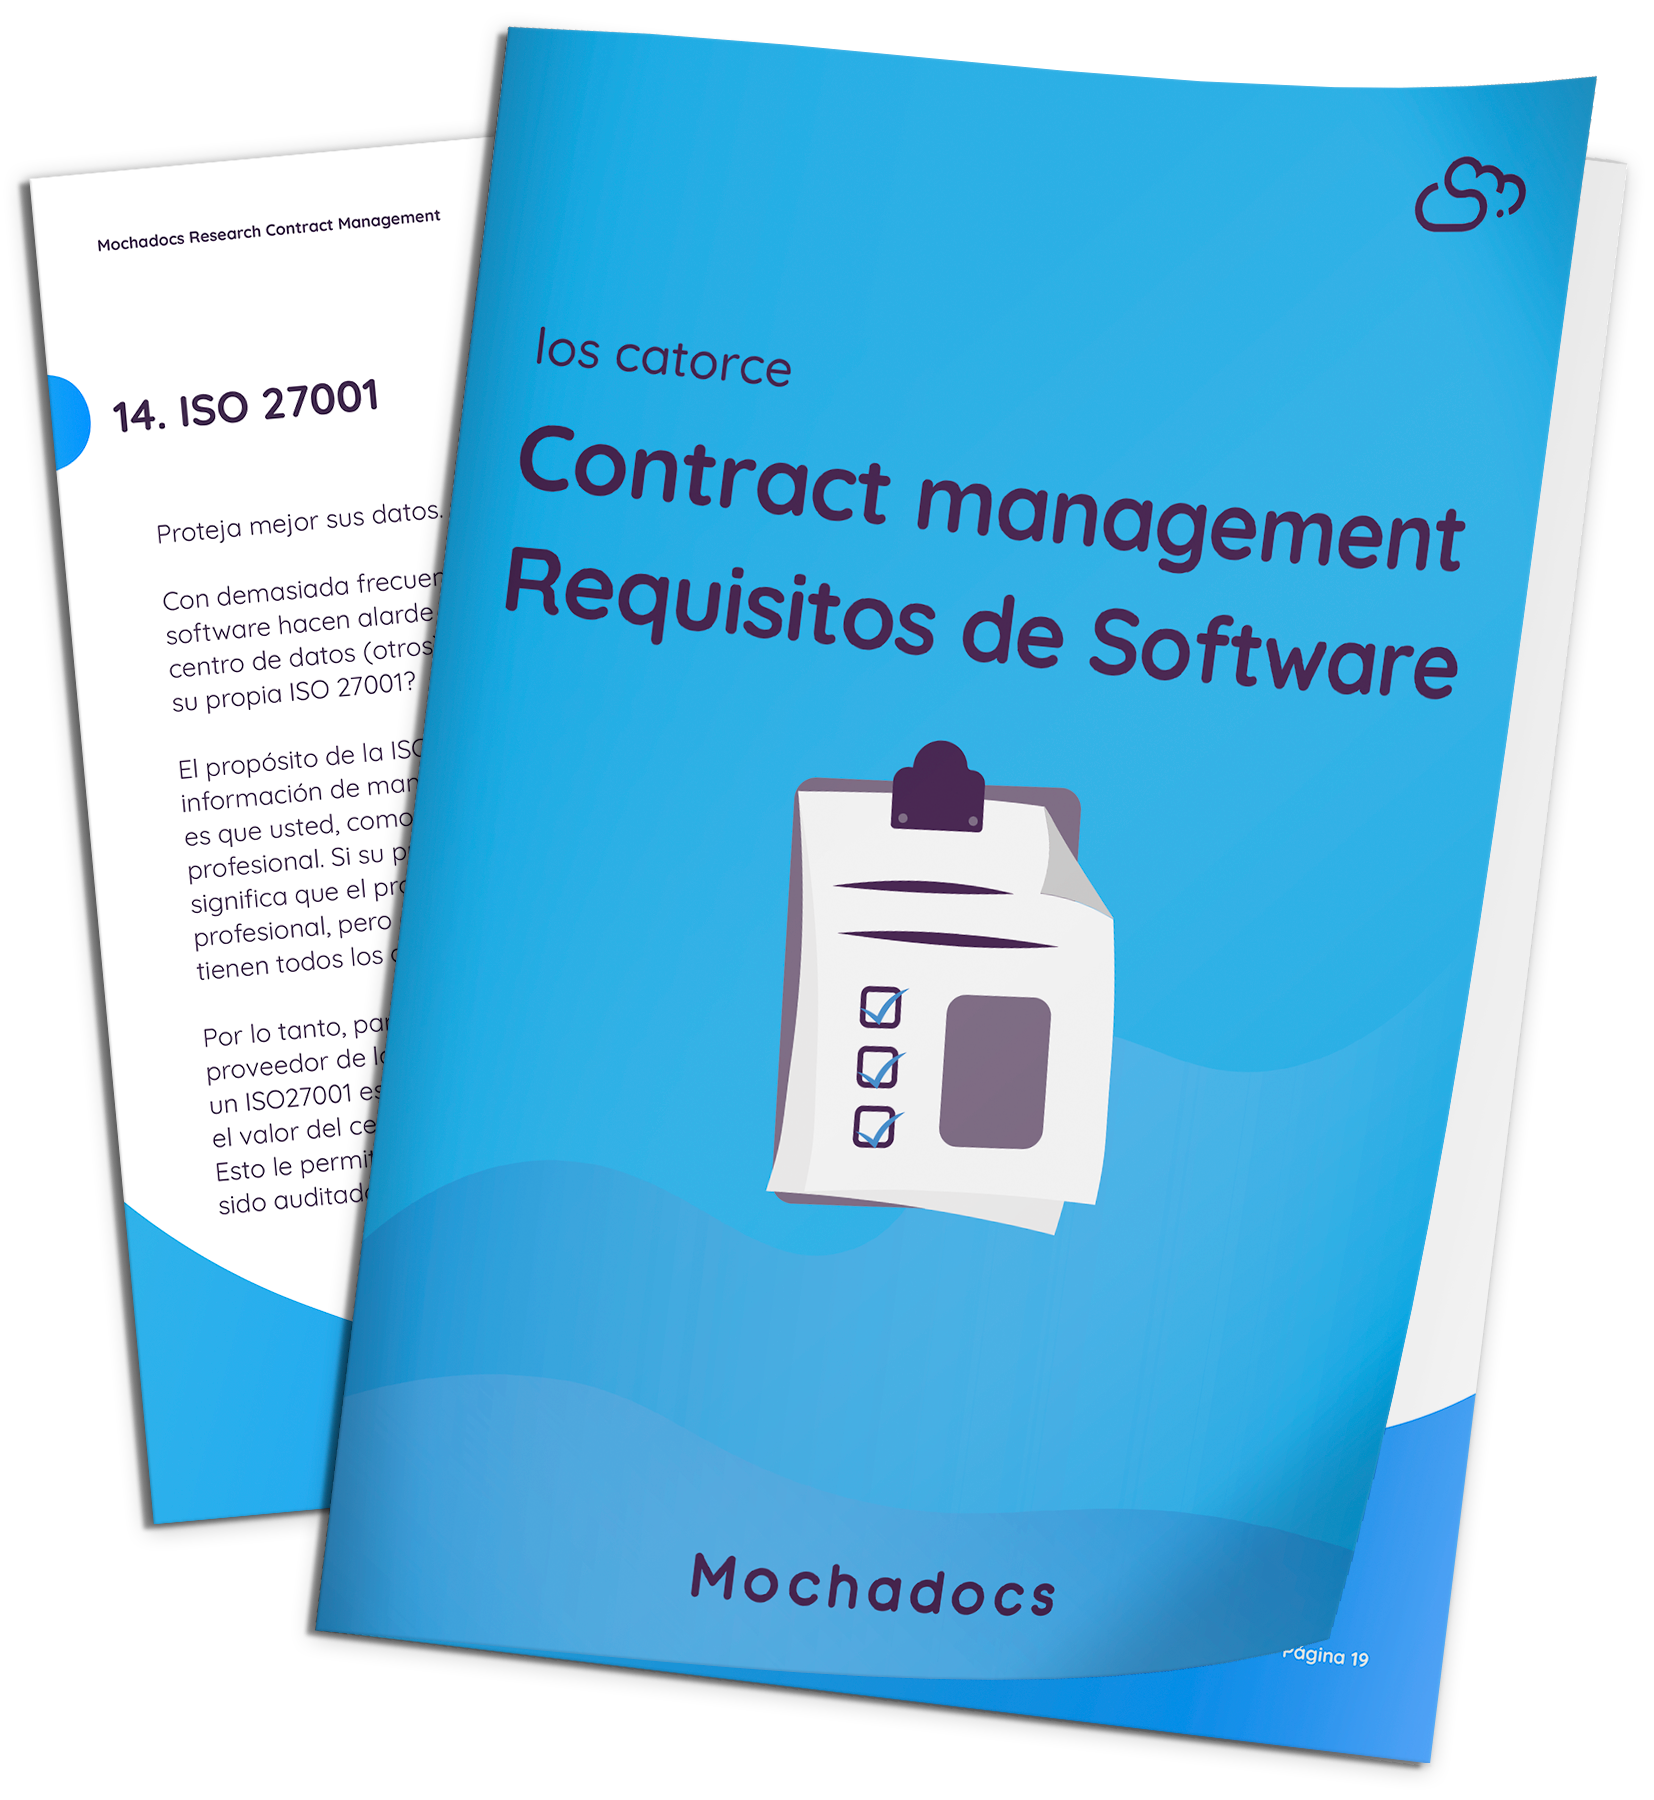 Mochadocs - Contract Management - eBook - los catorce Contract Management Requisitos de Software